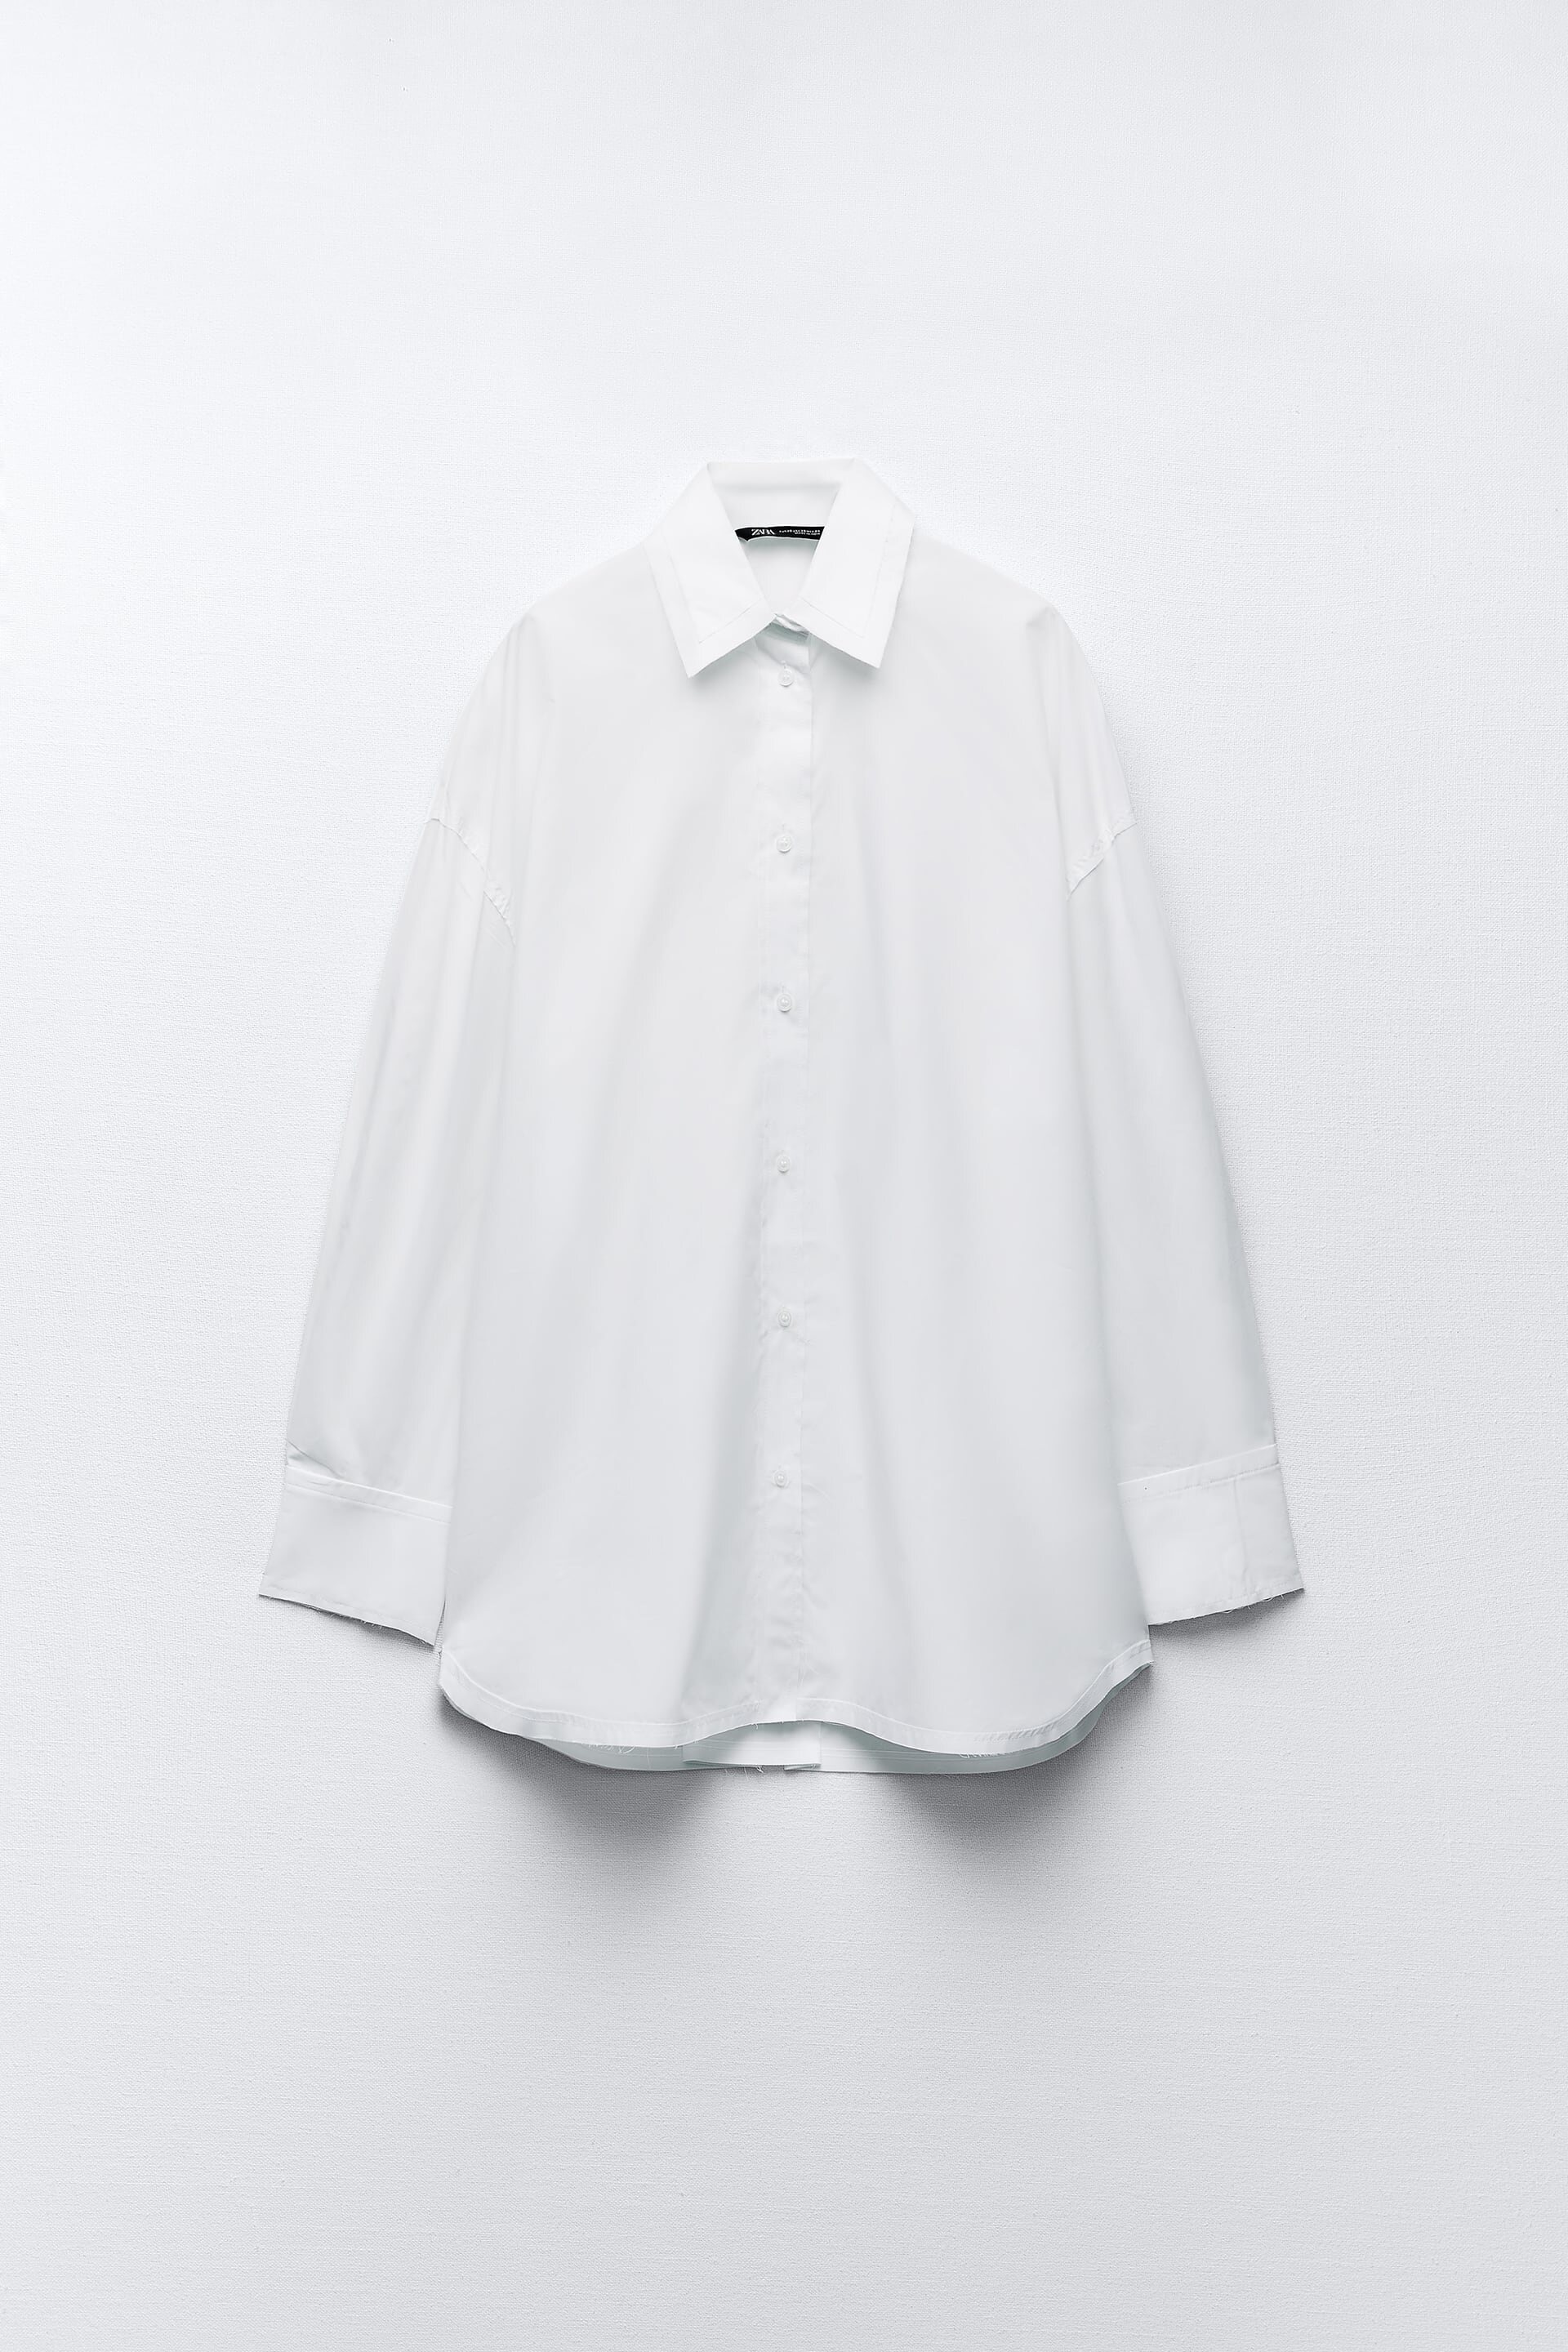 Camisa blanca estilo oversize: 19,95€ | Foto: Zara